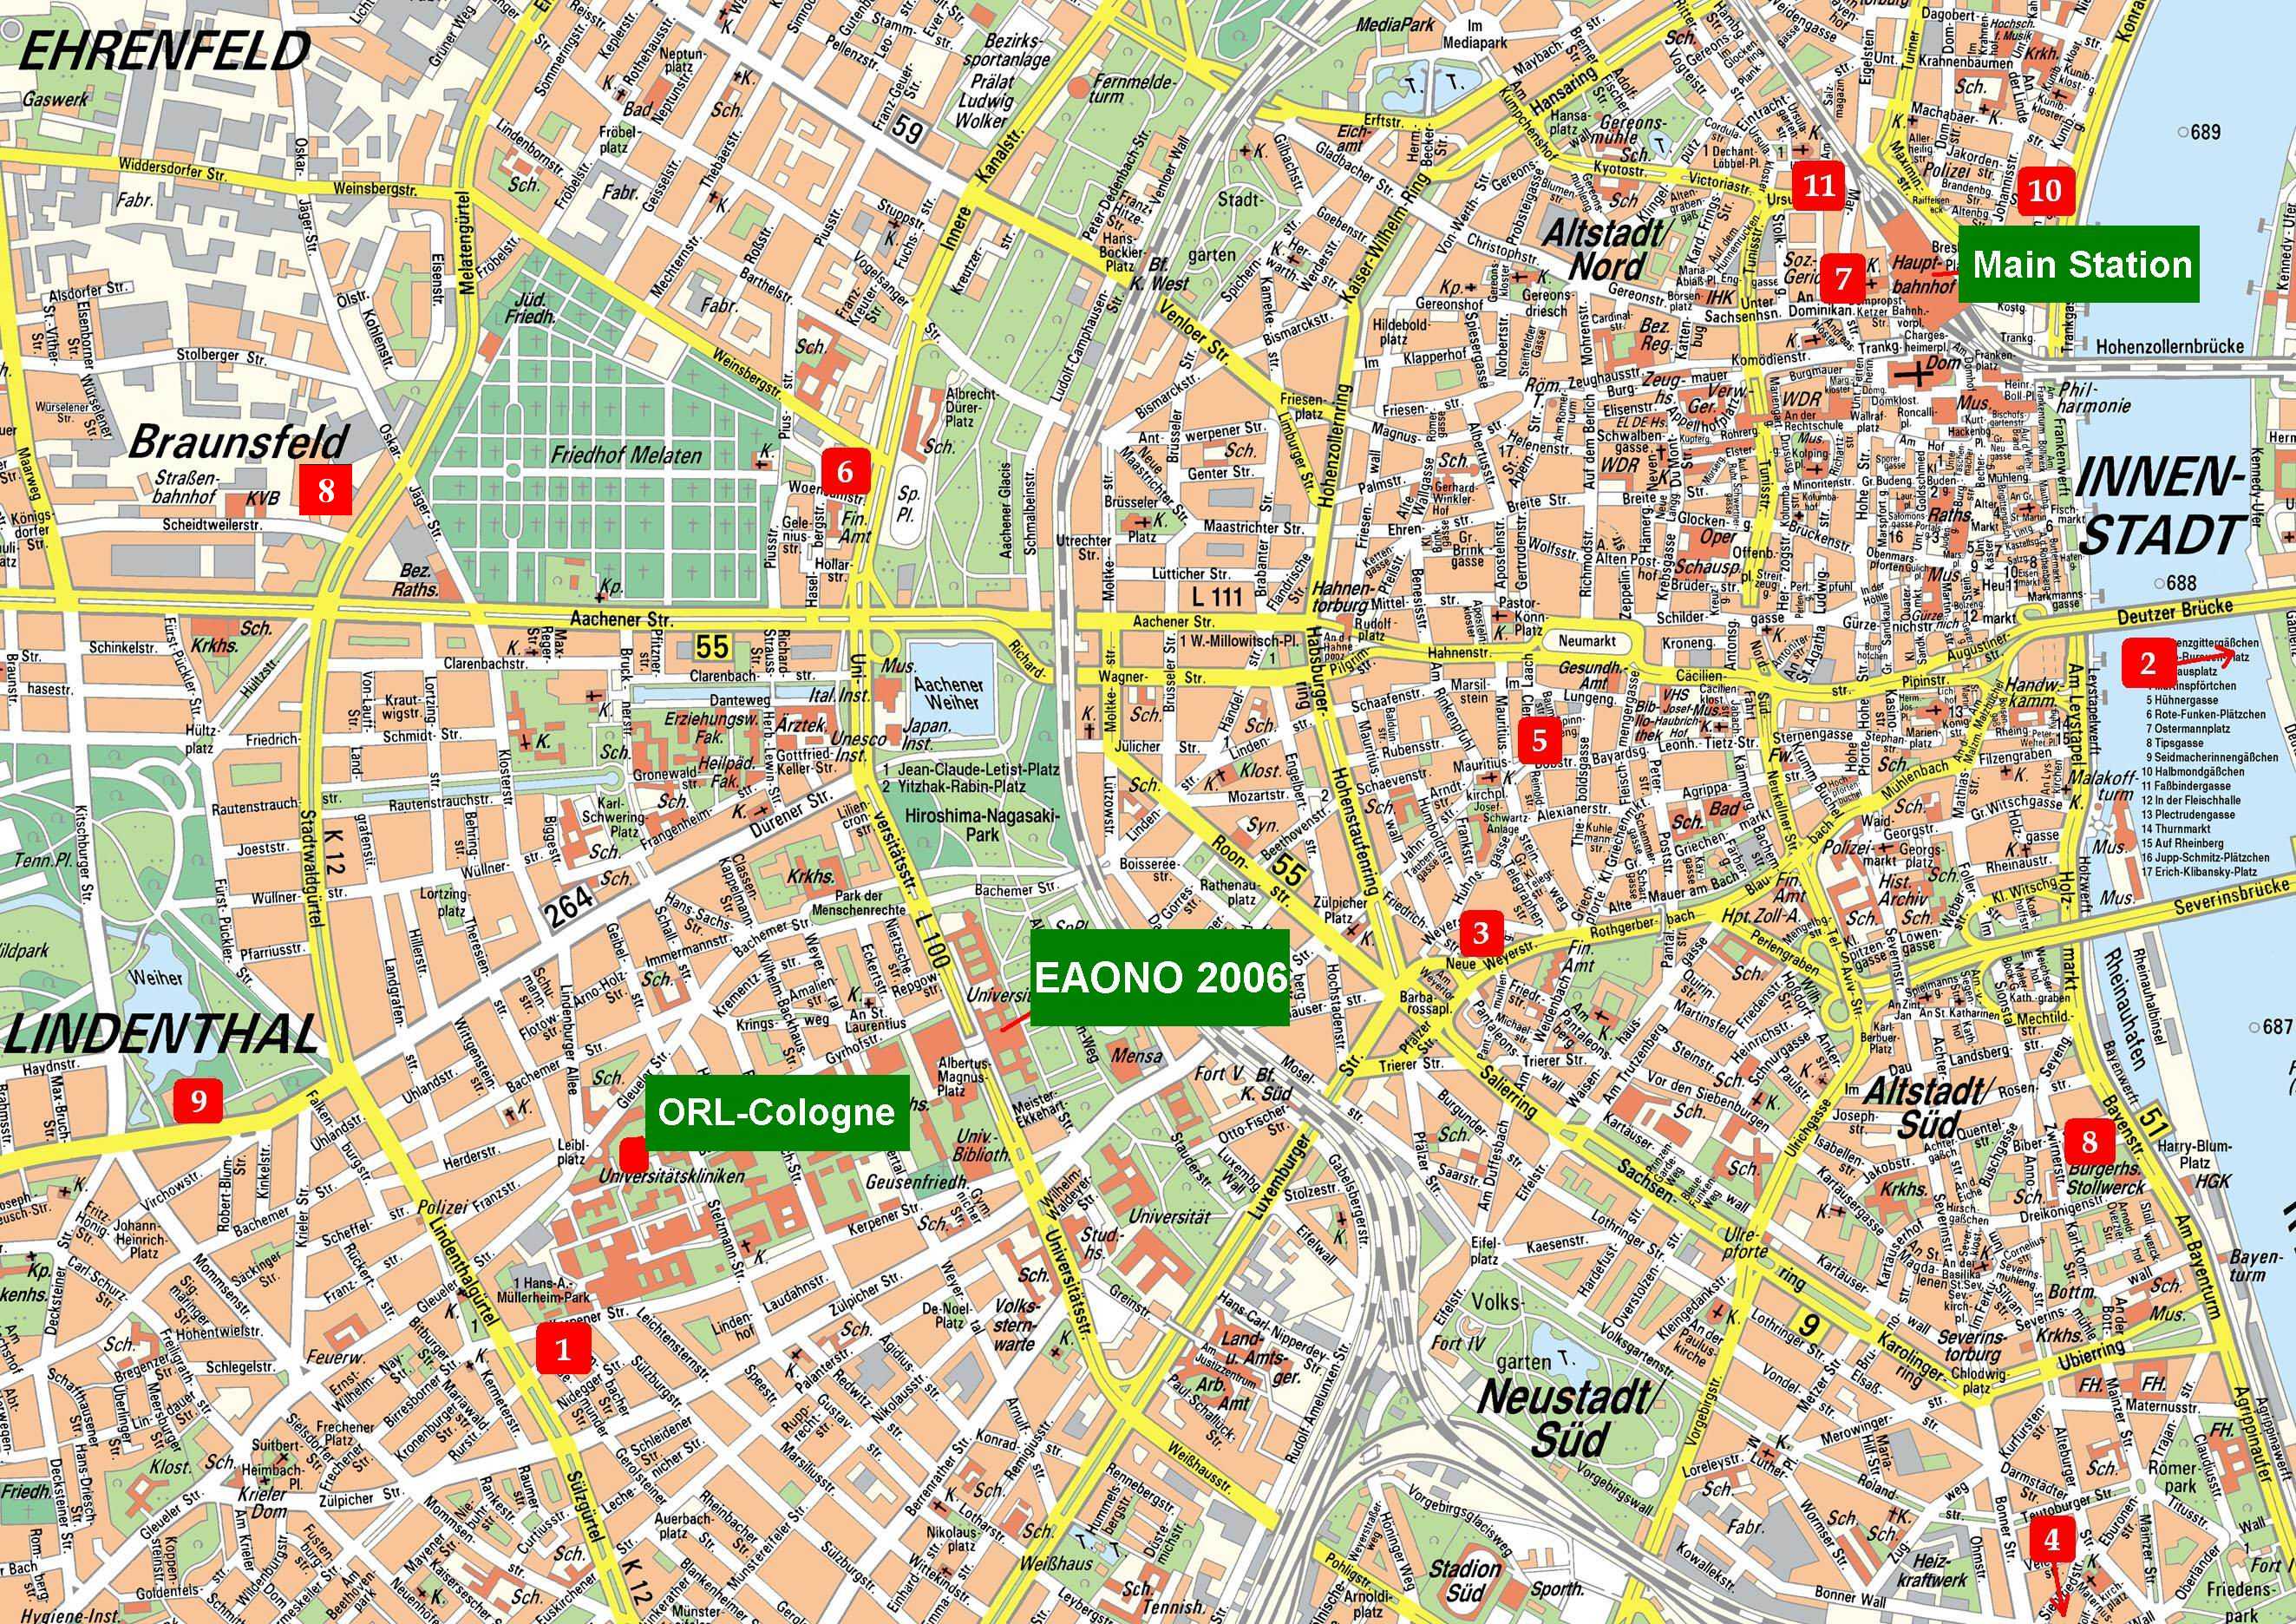 koln karta Cologne Map   Detailed City and Metro Maps of Cologne for Download  koln karta